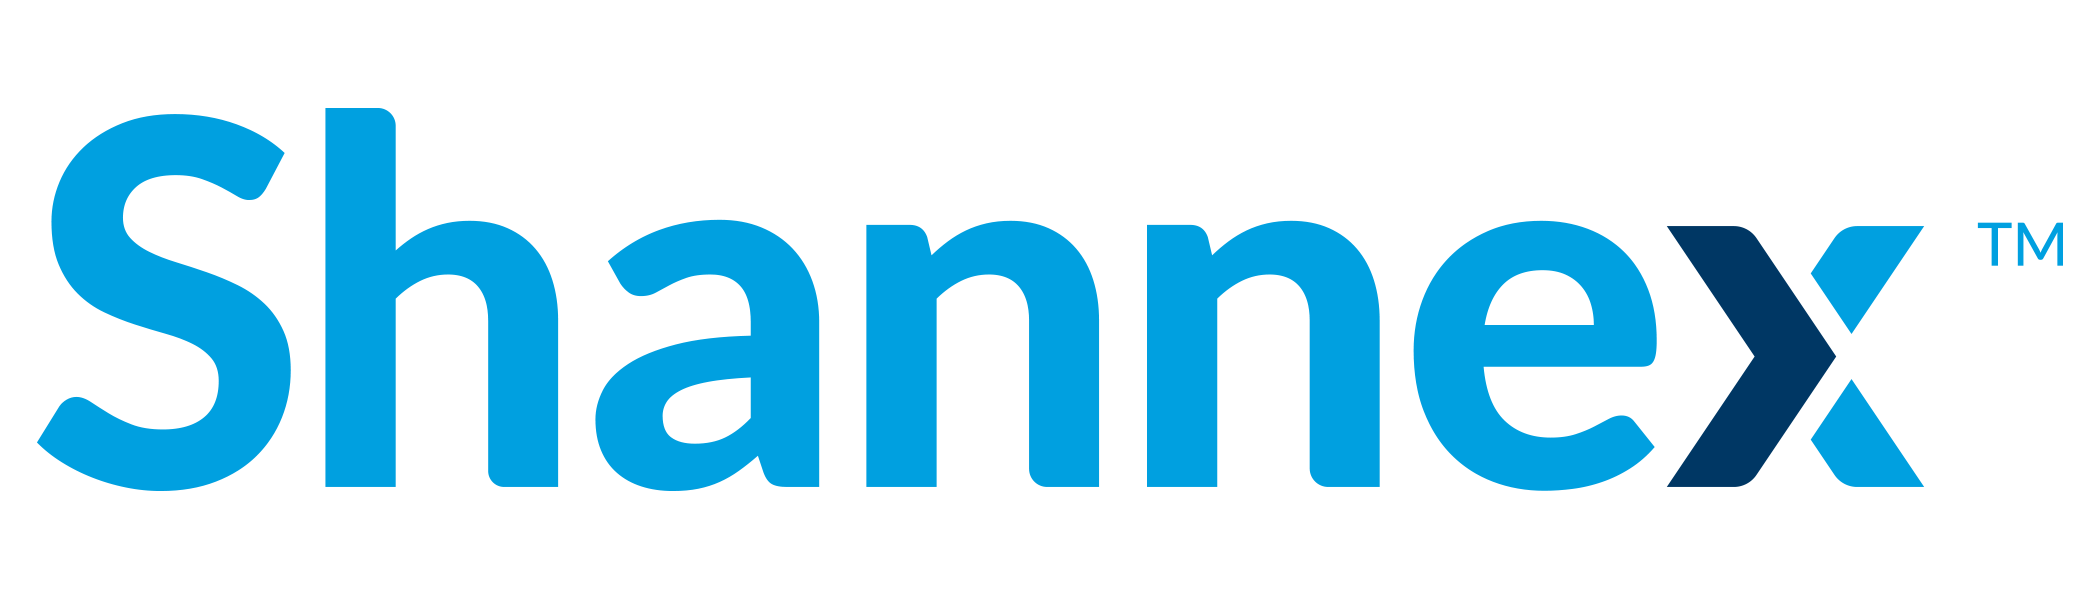 Sponsor logo: Shannex Inc.